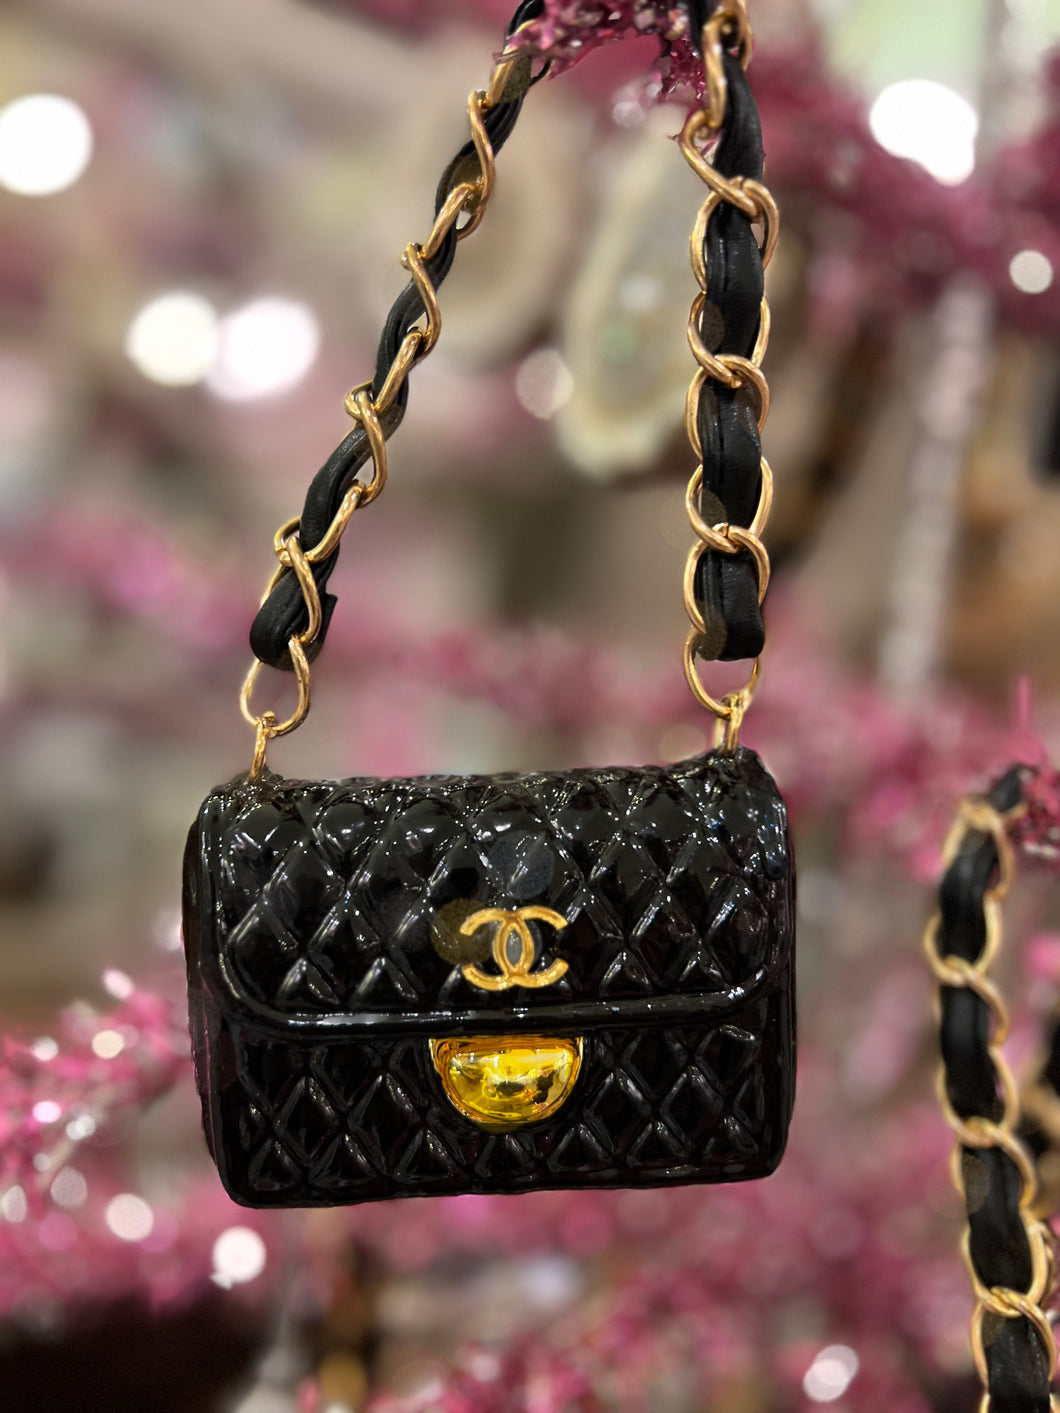 Personalized Luxury Handbag Brown Christmas Ornament